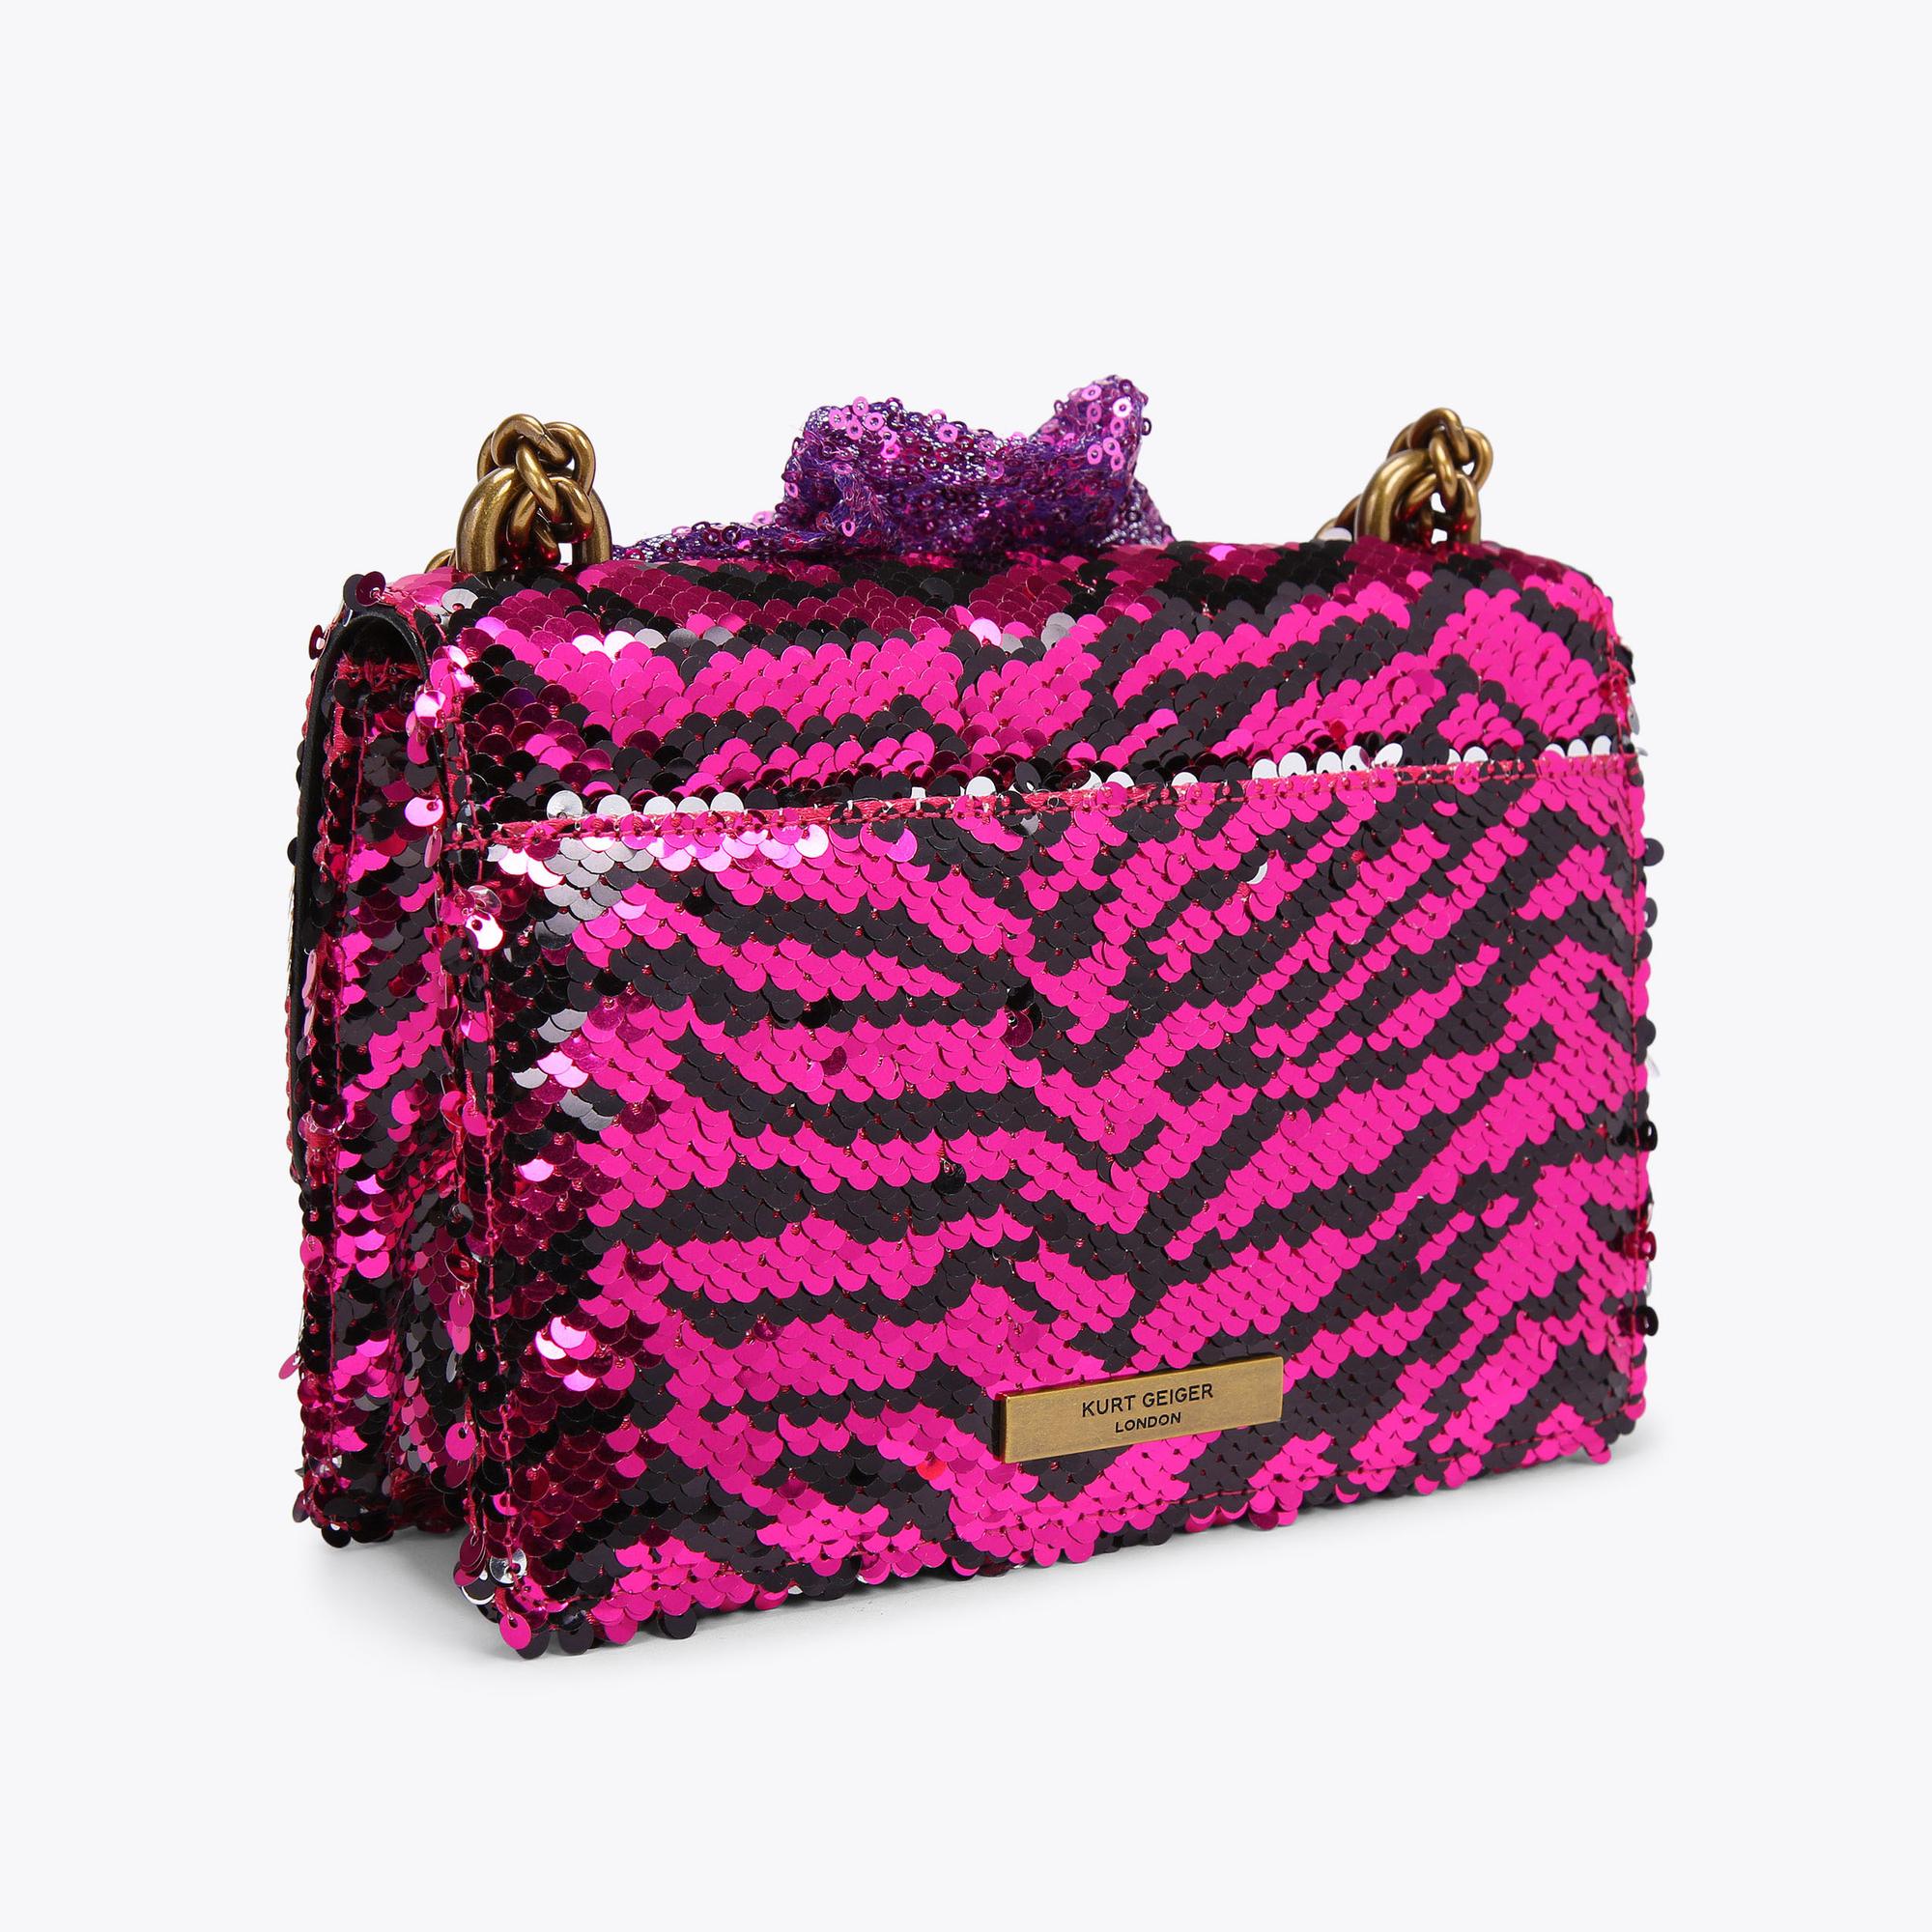 Kurt Geiger - Authenticated Handbag - Synthetic Purple for Women, Never Worn